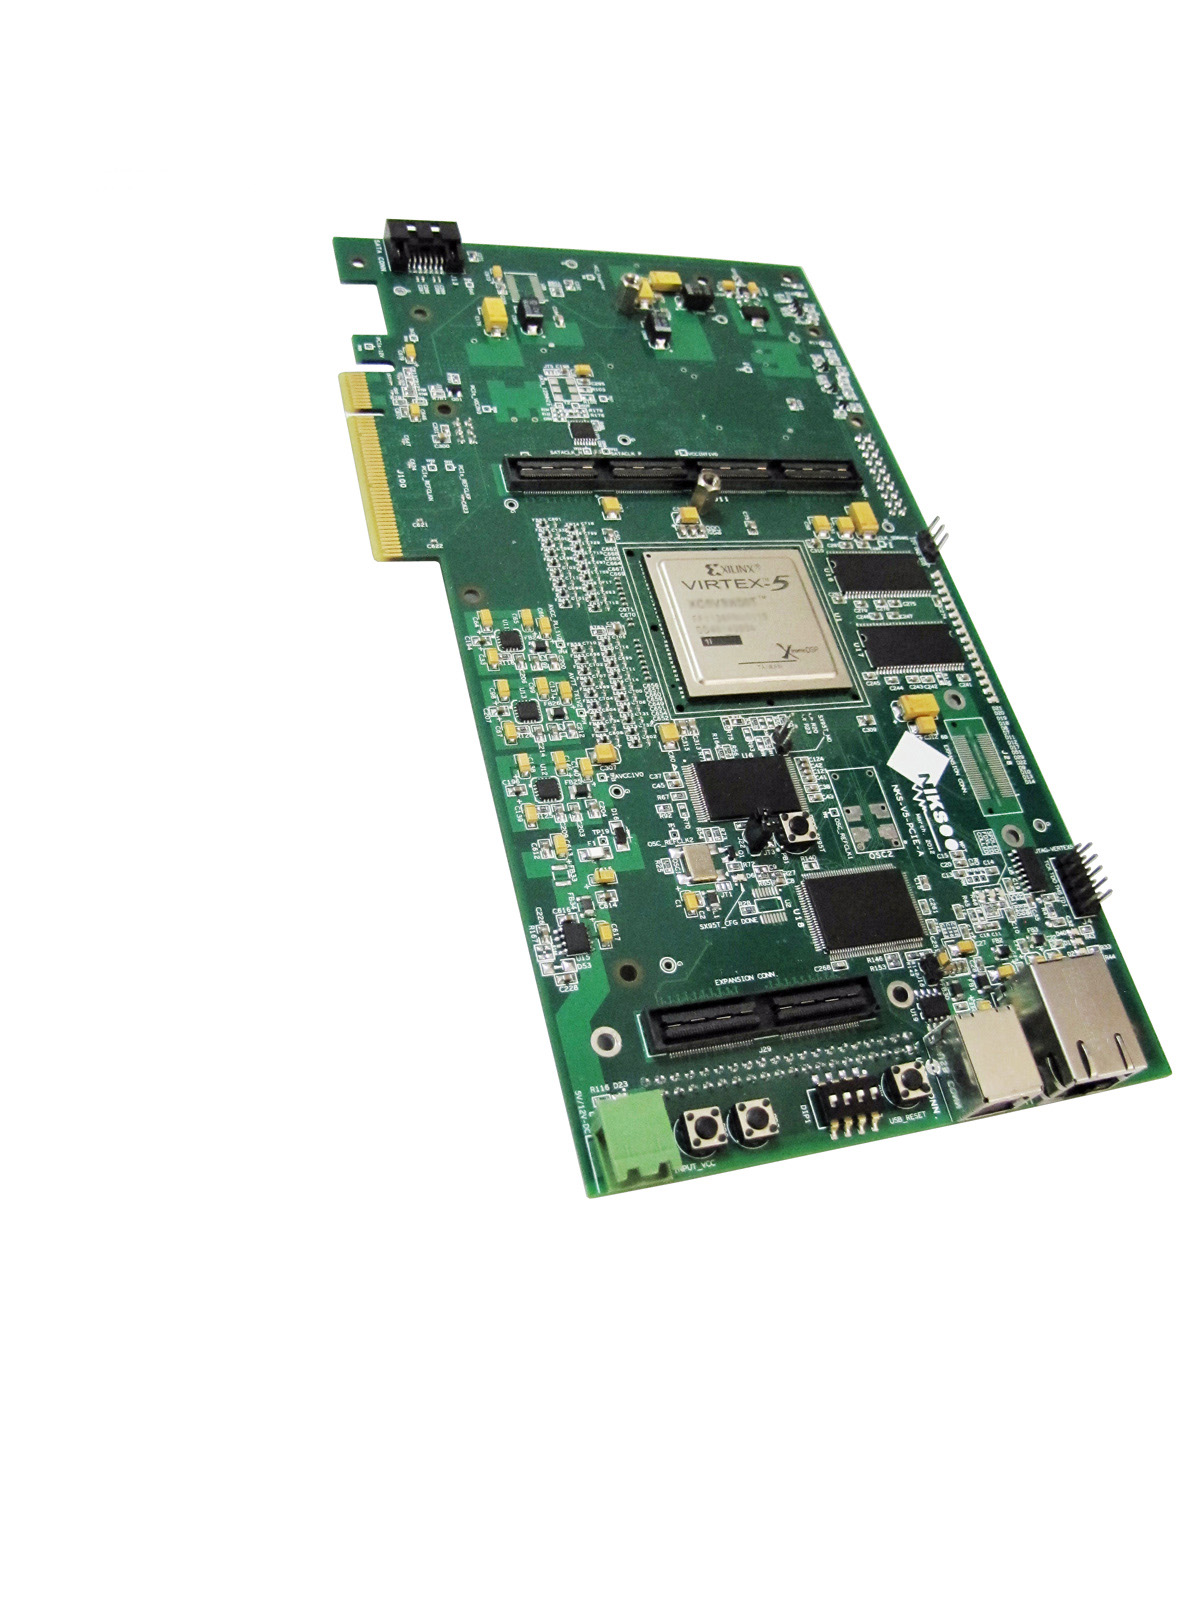 کارت PCIe پردازشی Virtex-5